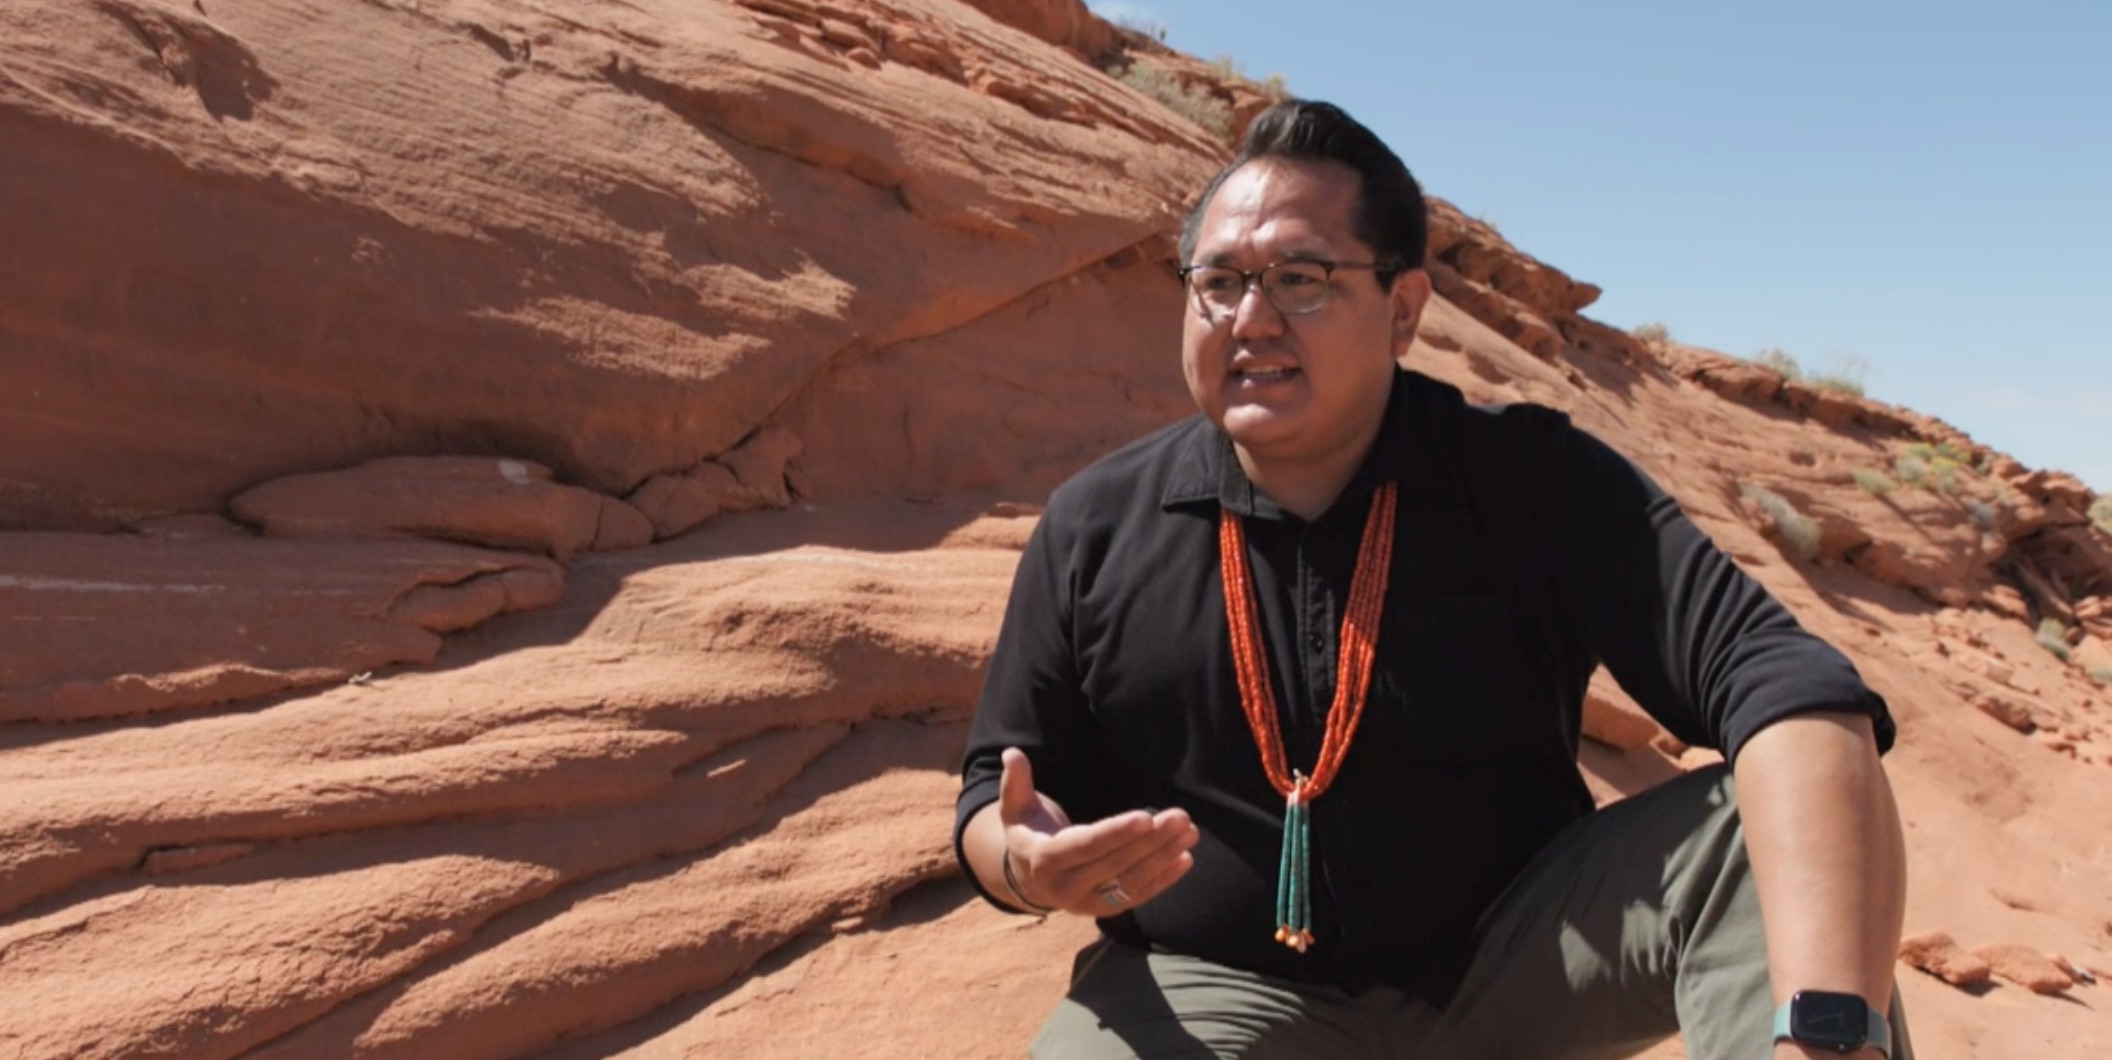 NASA's Aaron Yazzie explores Mars in PBS's 'Native America' Season 2 (exclusive)